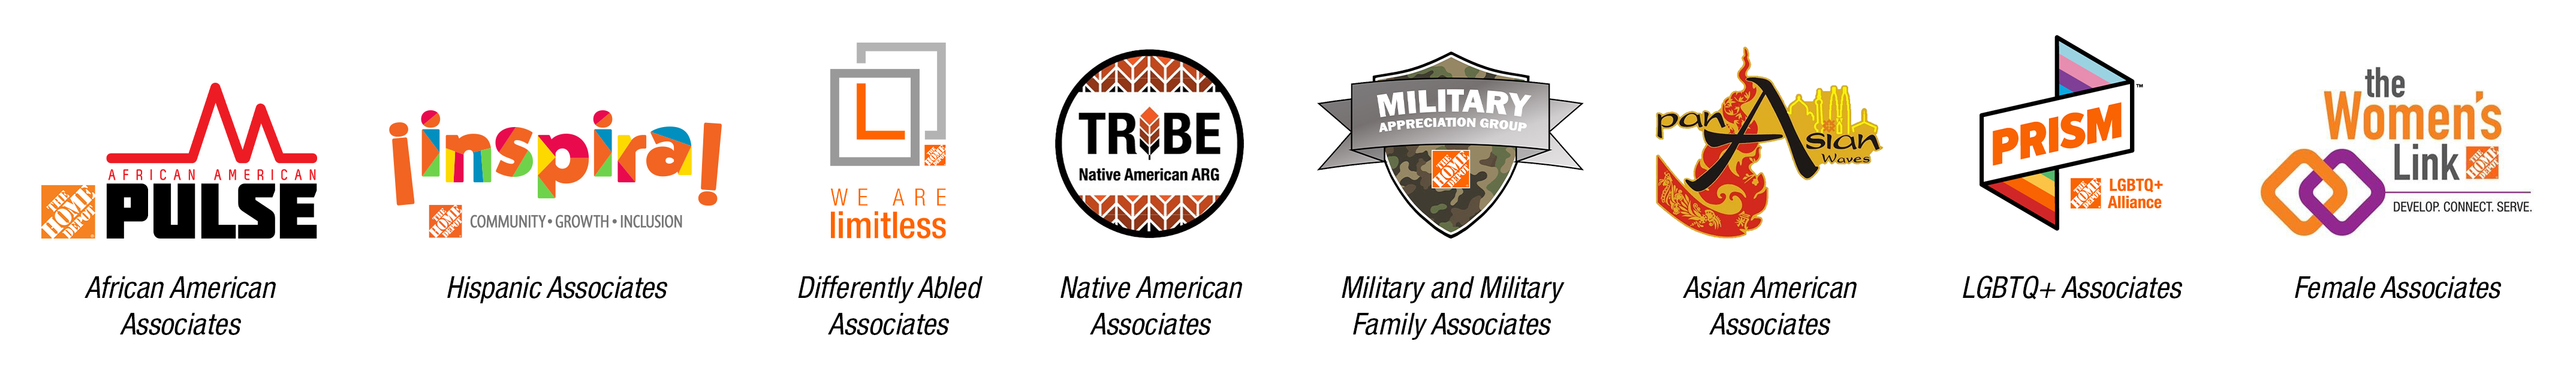 Associate Resource Group logos